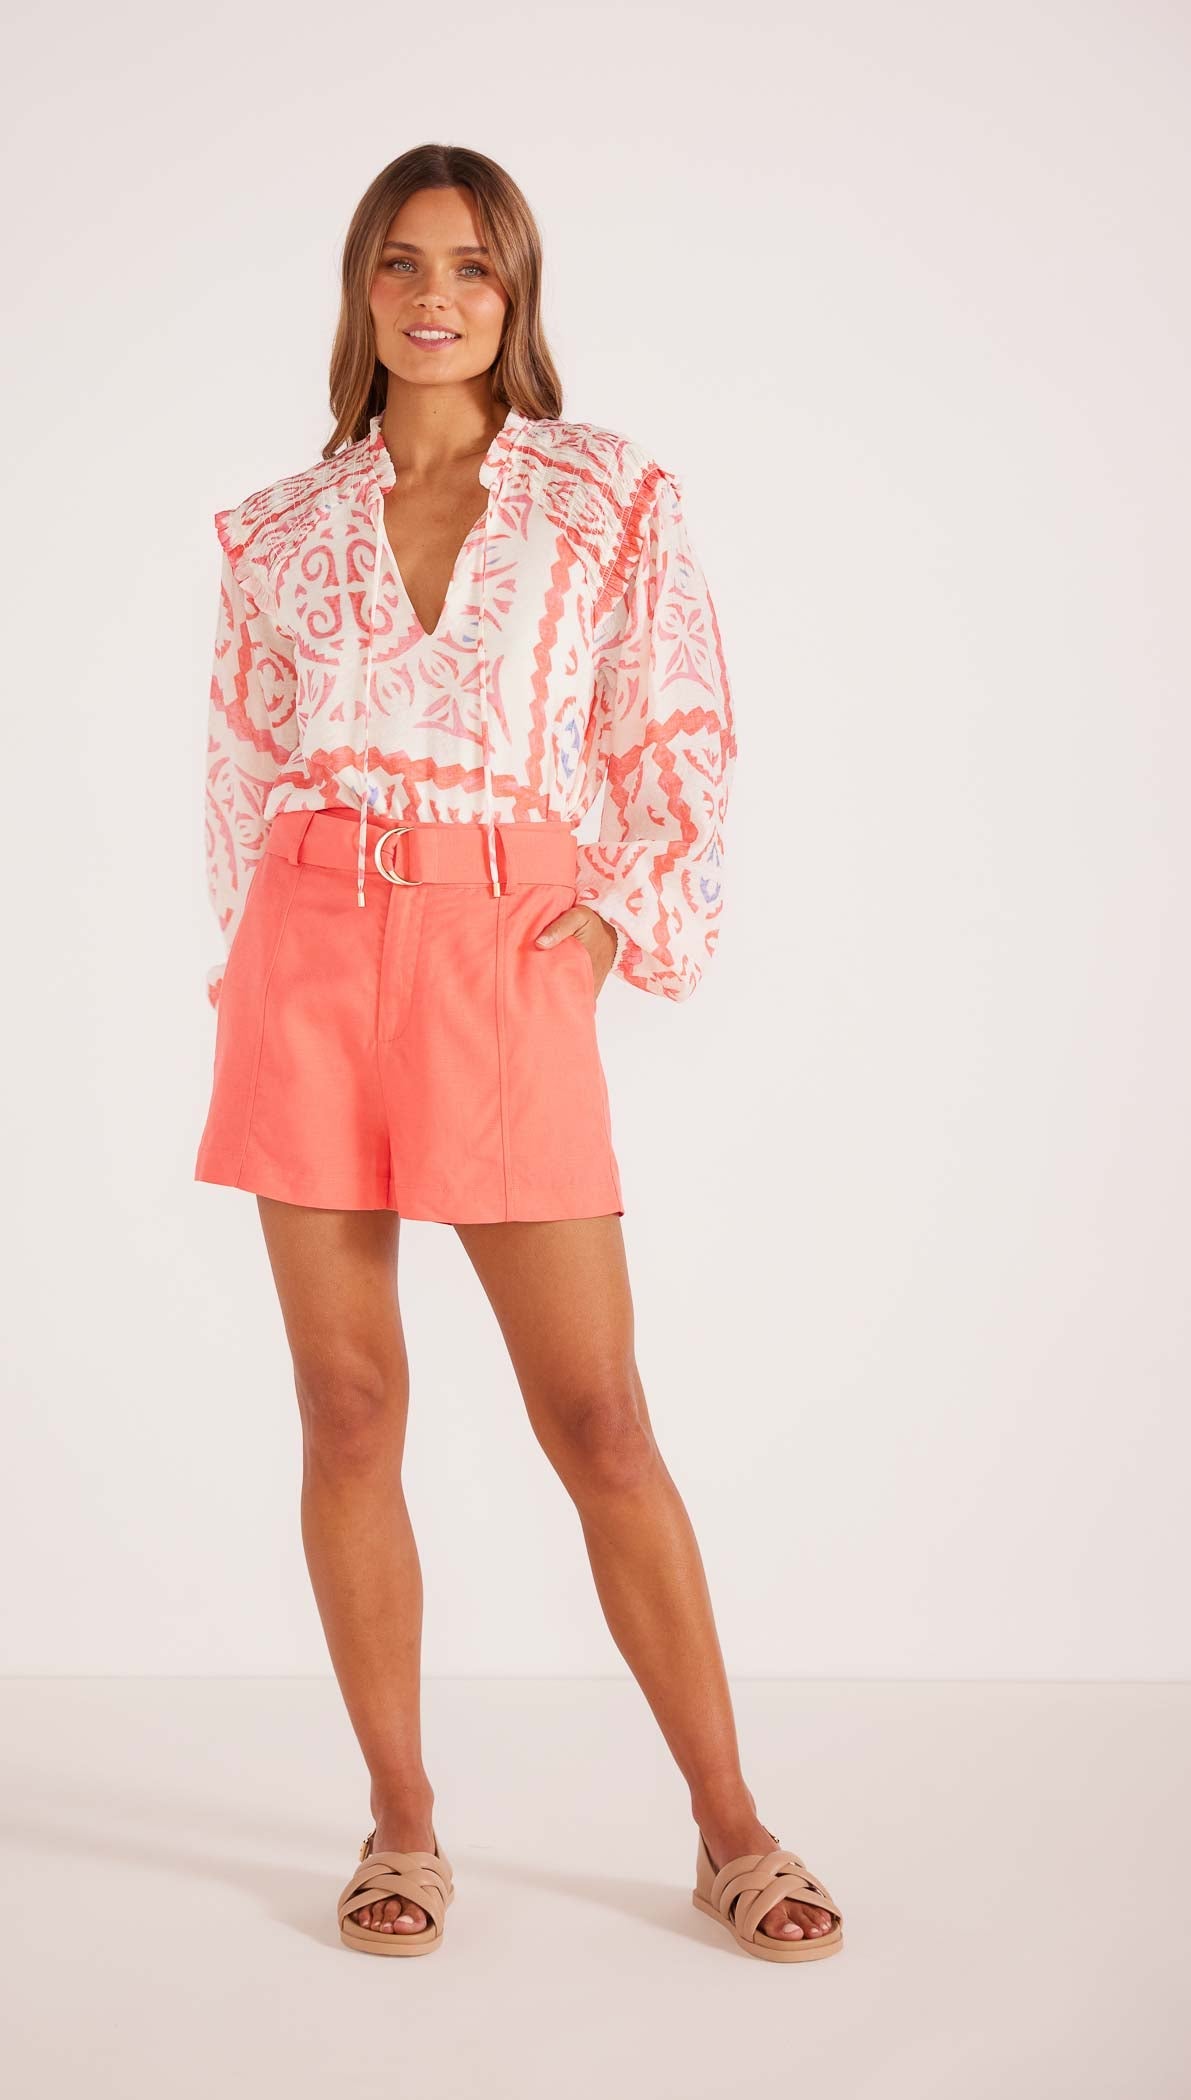 Lahana - Zadie Biker Shorts in Dragonfruit Pink